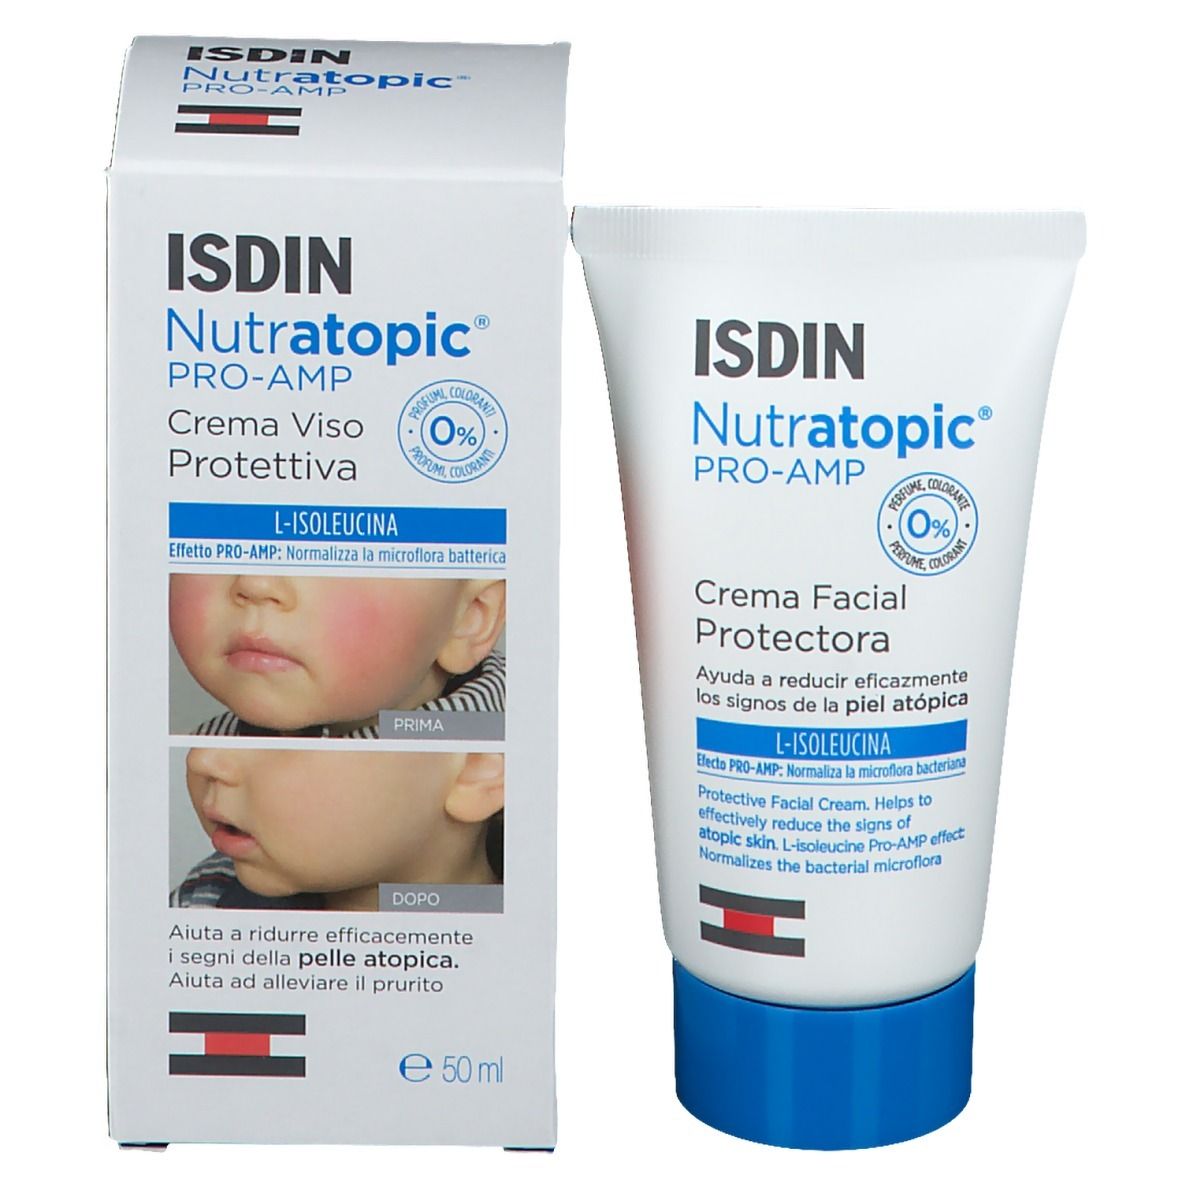 ISDIN Nutratopic® Pro-AMP Crema Facial